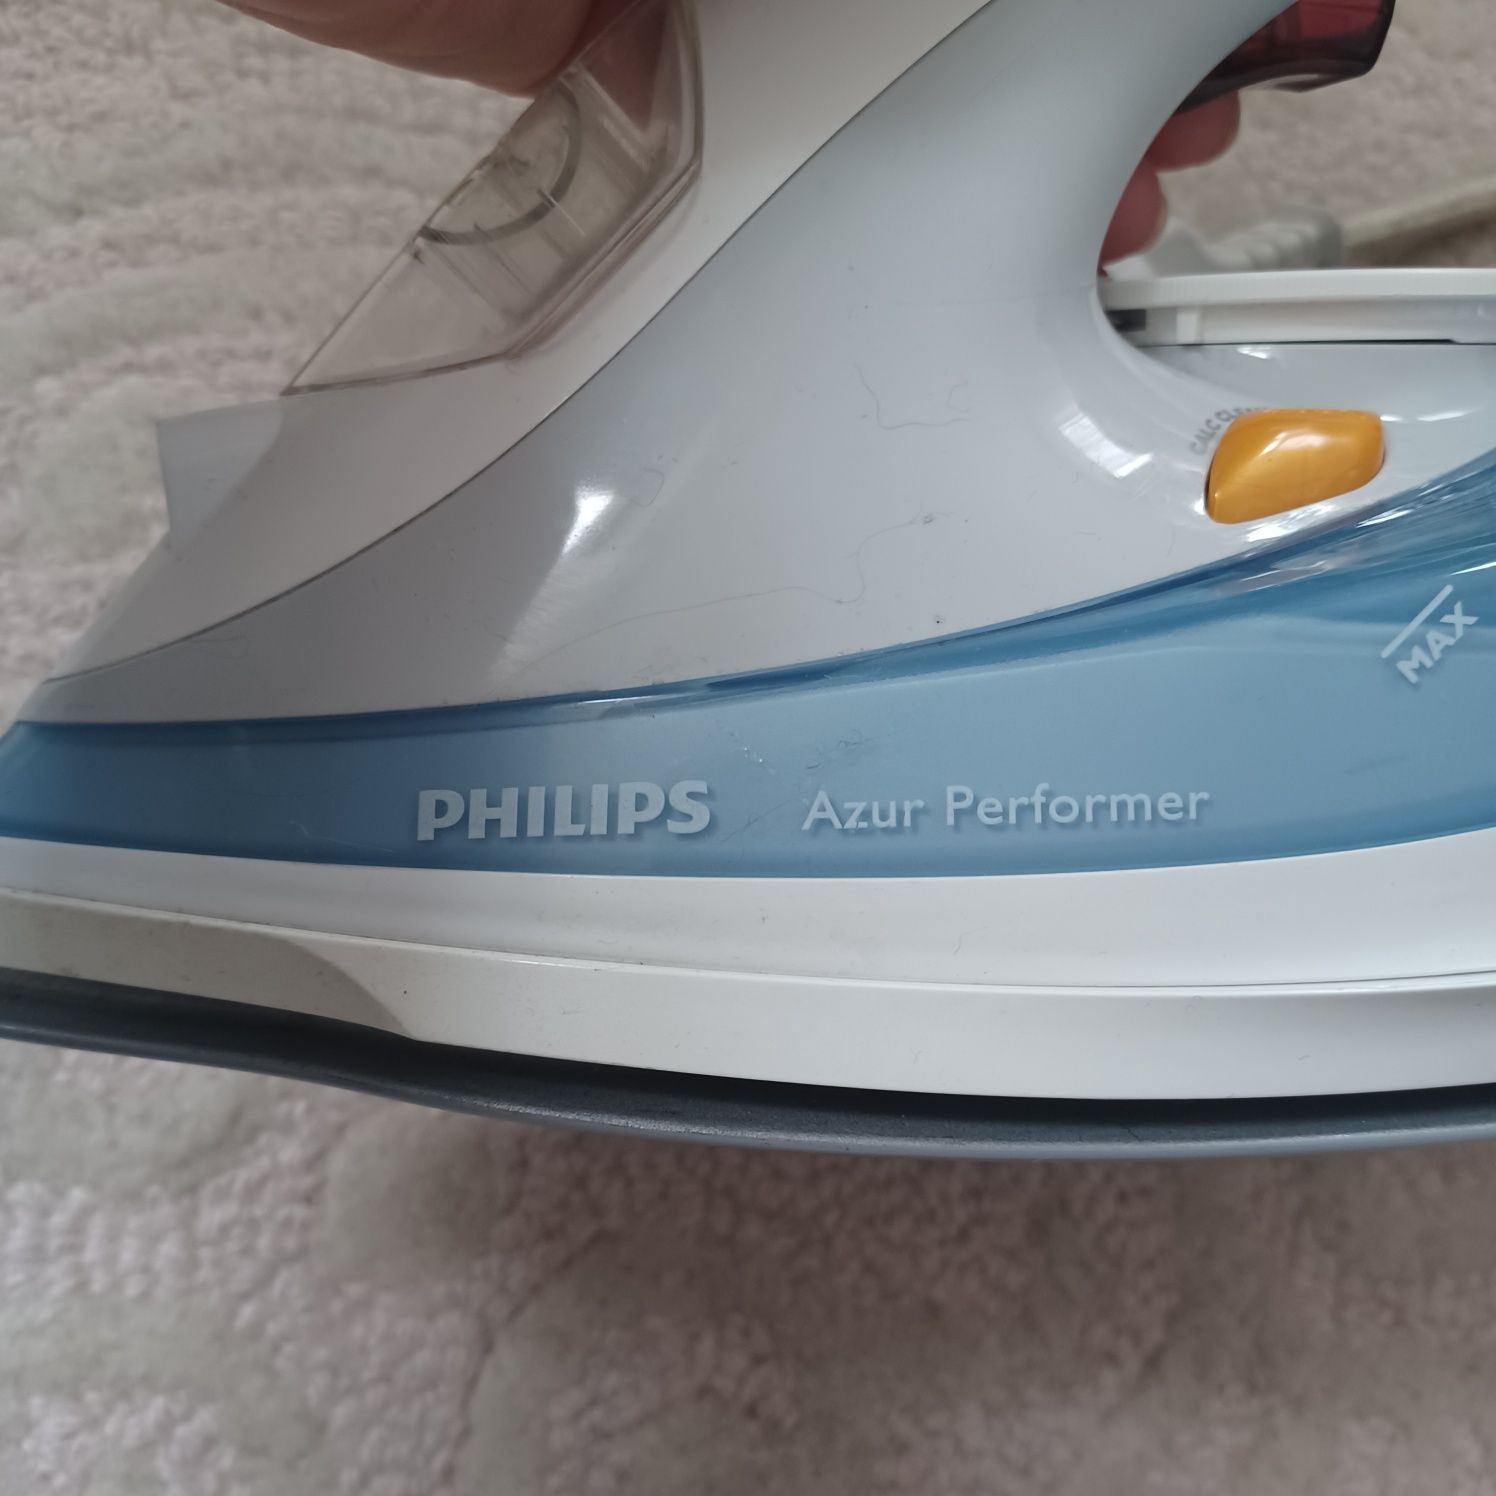 Żelazko Philips Azur Performer